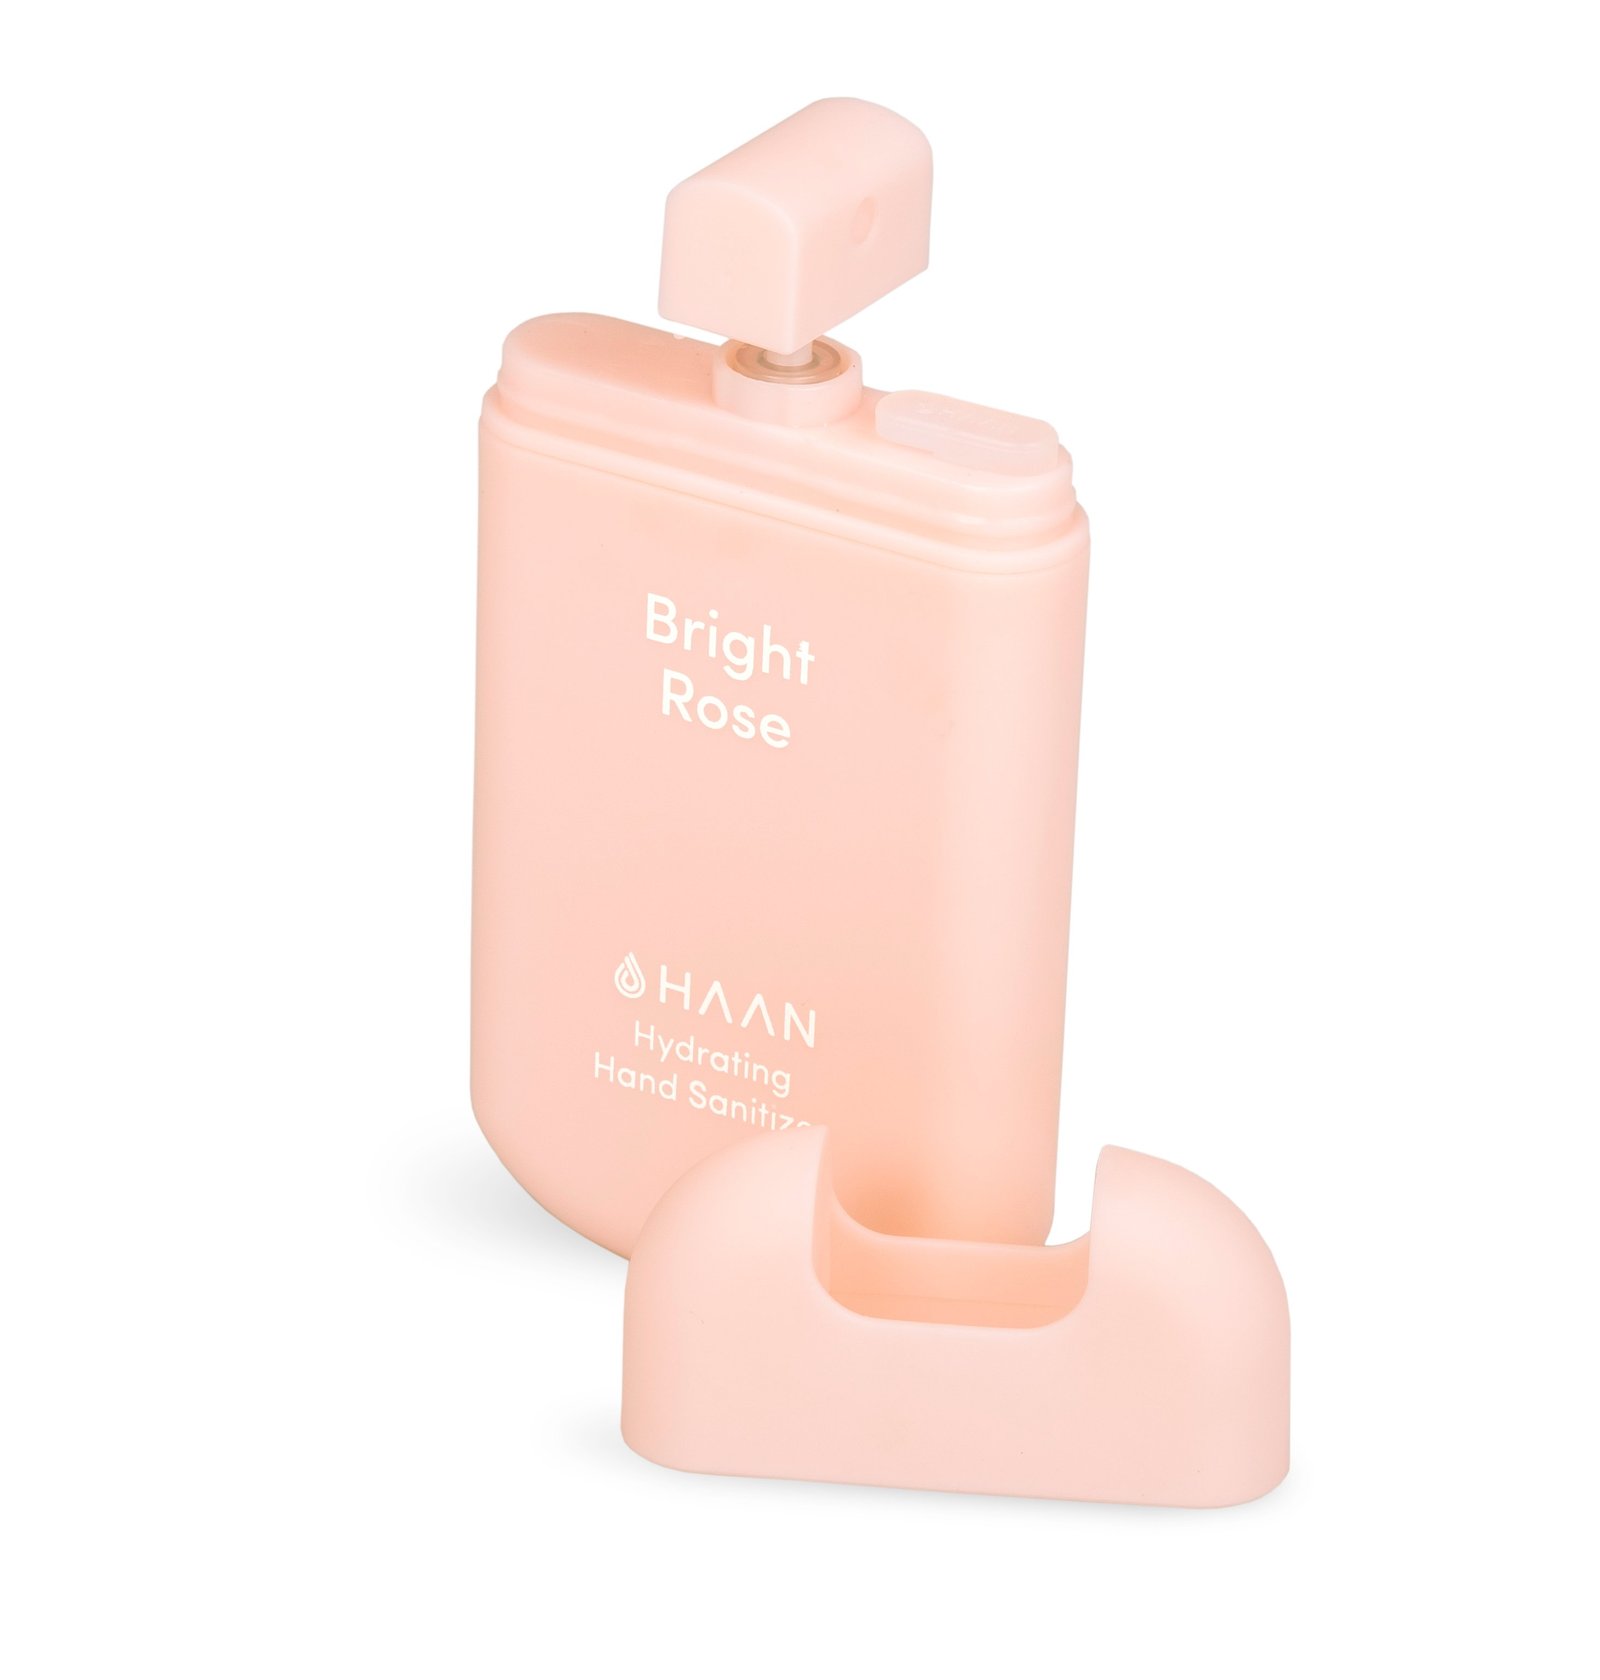 HAAN Bright Rose Hydrating Pocket Hand Sanitizer 30 ml